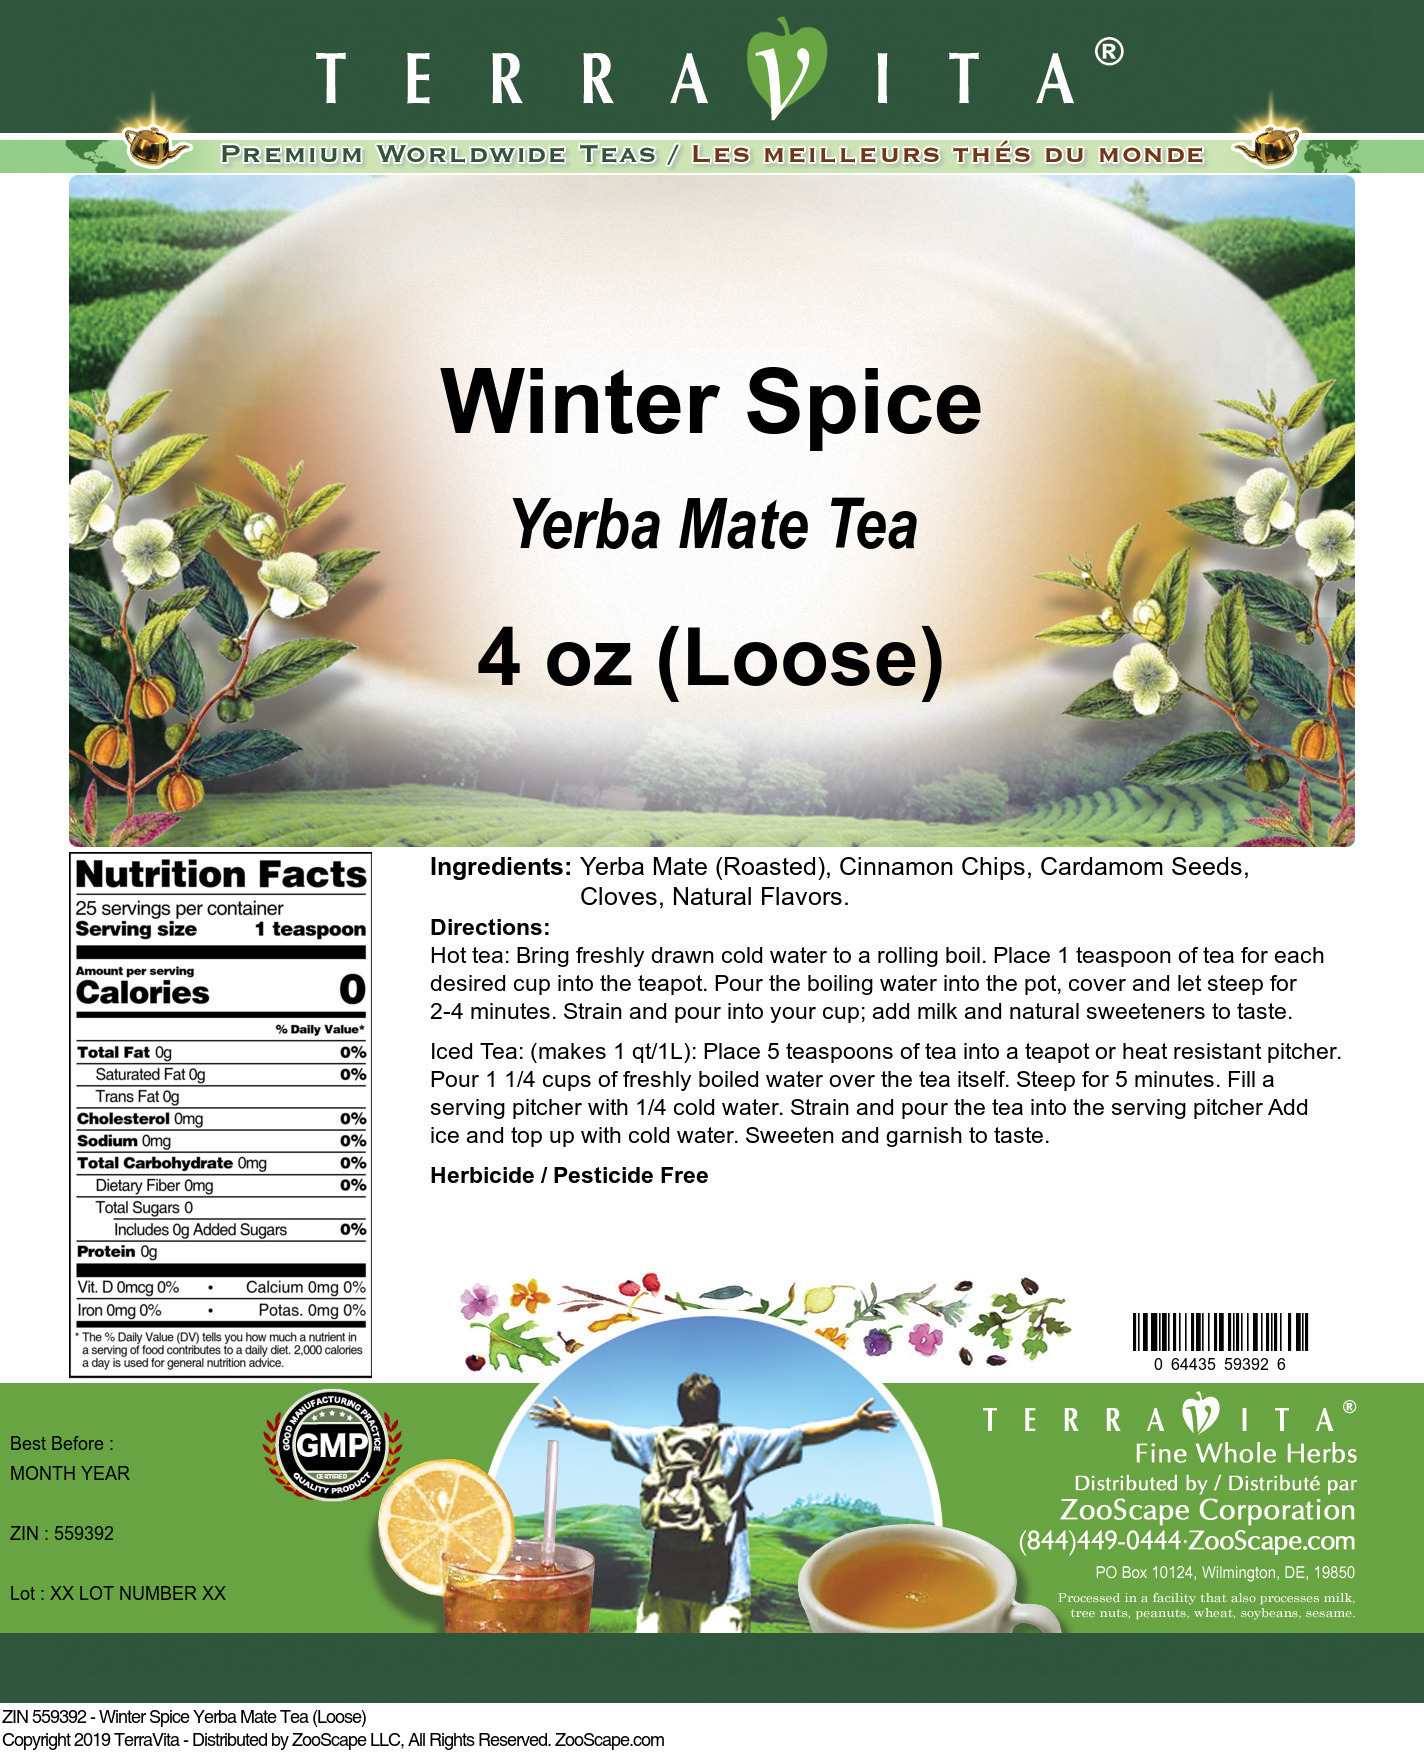 Winter Spice Yerba Mate Tea (Loose) - Label